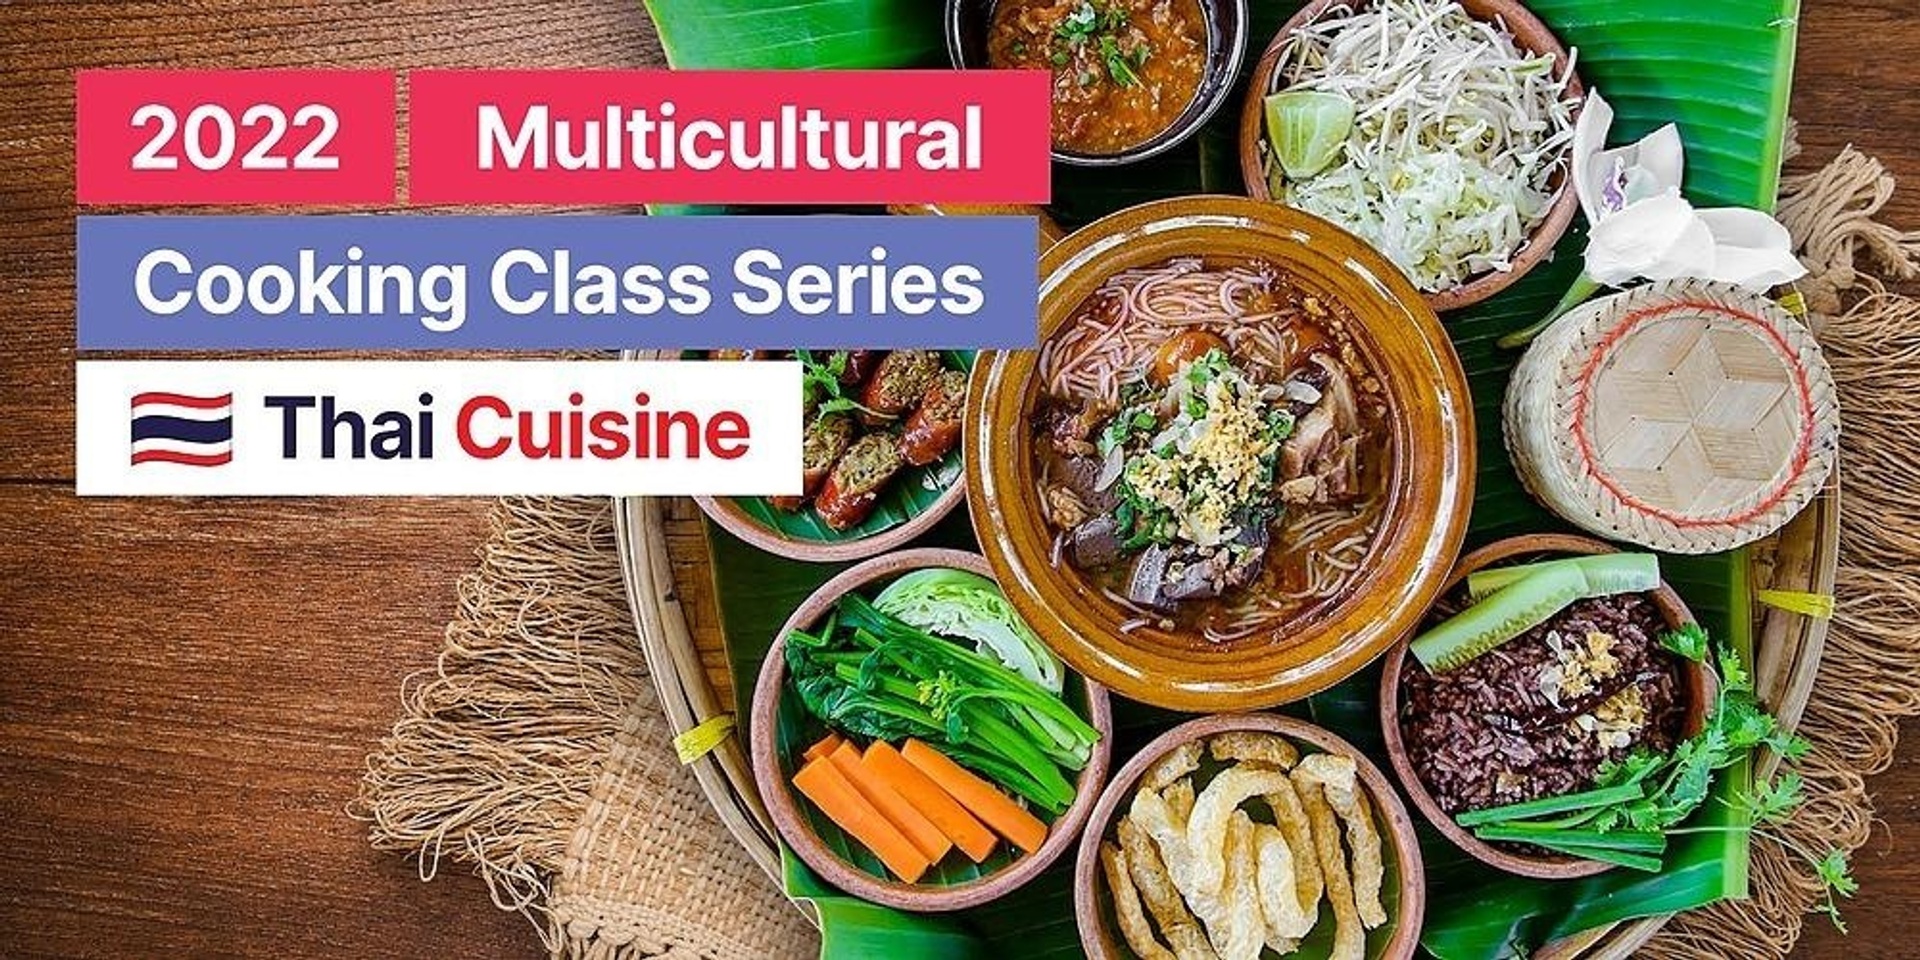 2022 Multicultural Cooking Class Series - Thai Cuisine